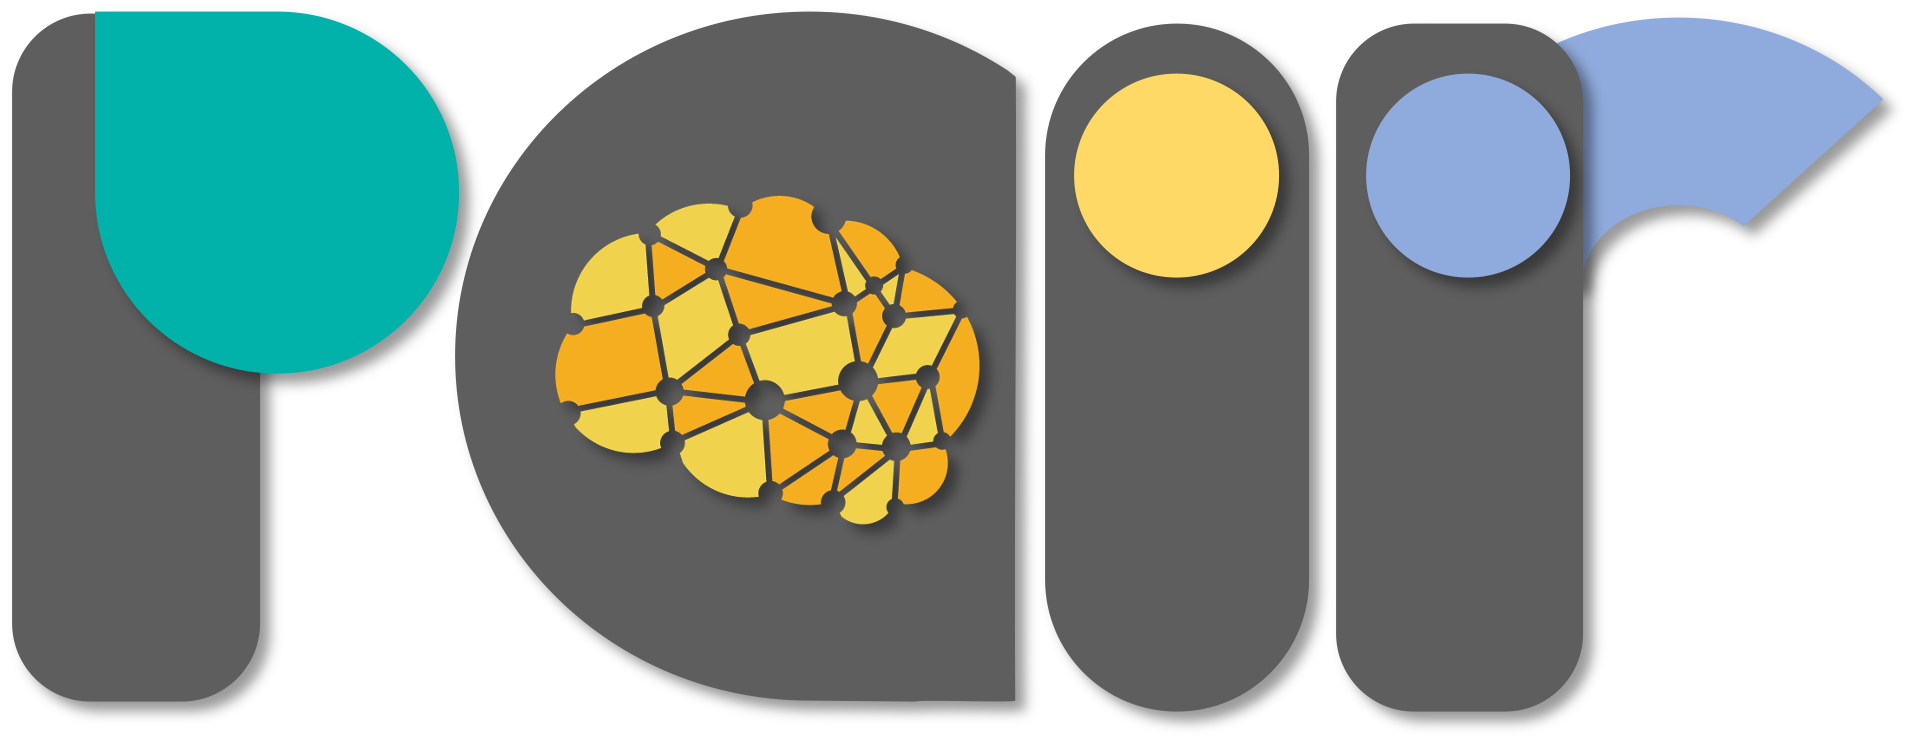 pair-logo-7-color